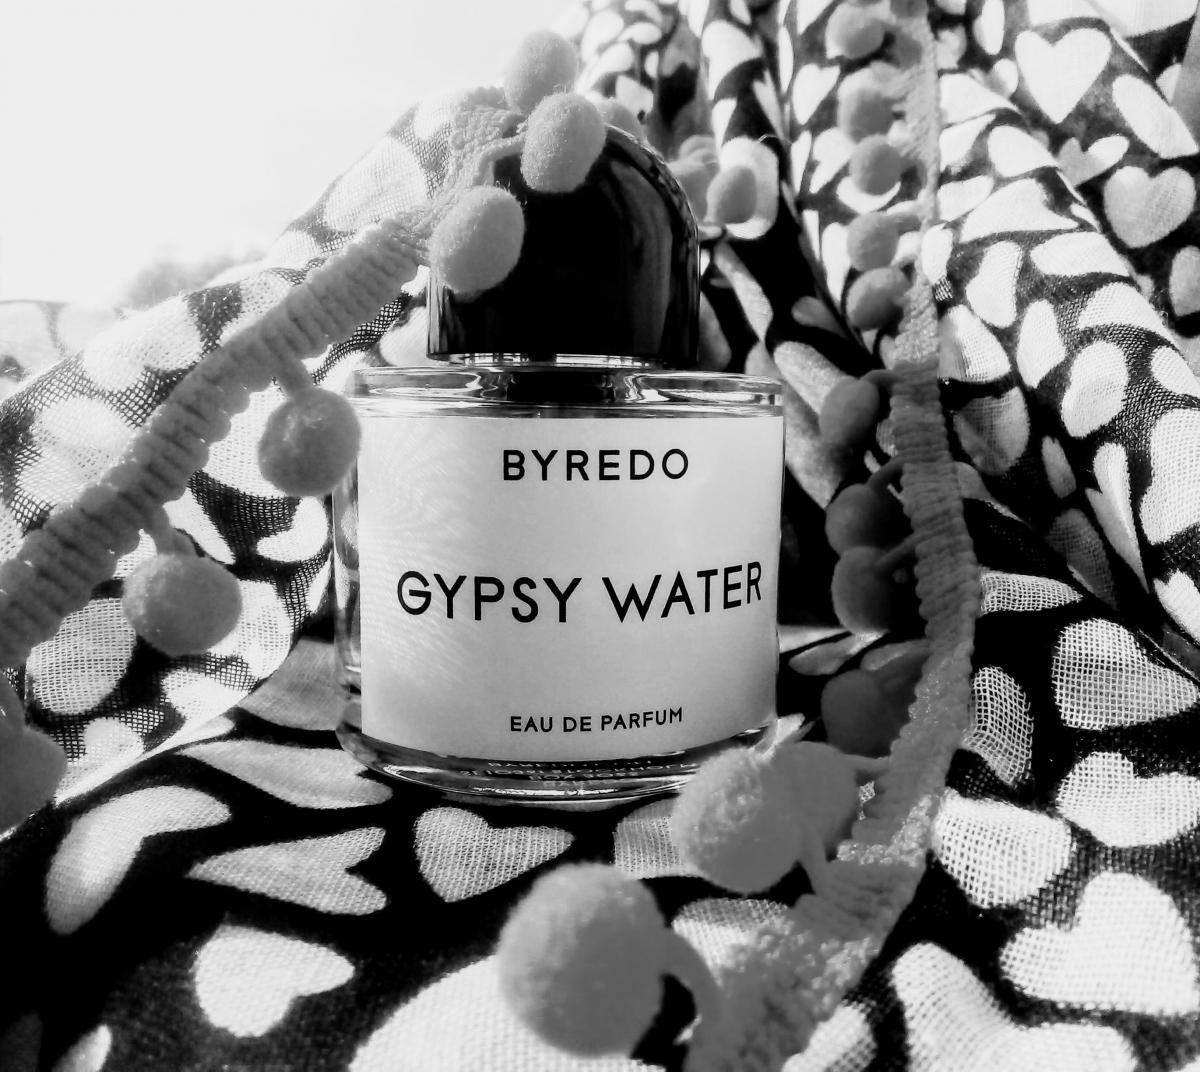 Байредо джипси ватер. Парфюм Byredo Gypsy Water. Byredo Gypsy Water Eau de Parfum. Байредо духи цыганская вода. Парфюмерная вода Byredo Gypsy Water унисекс.